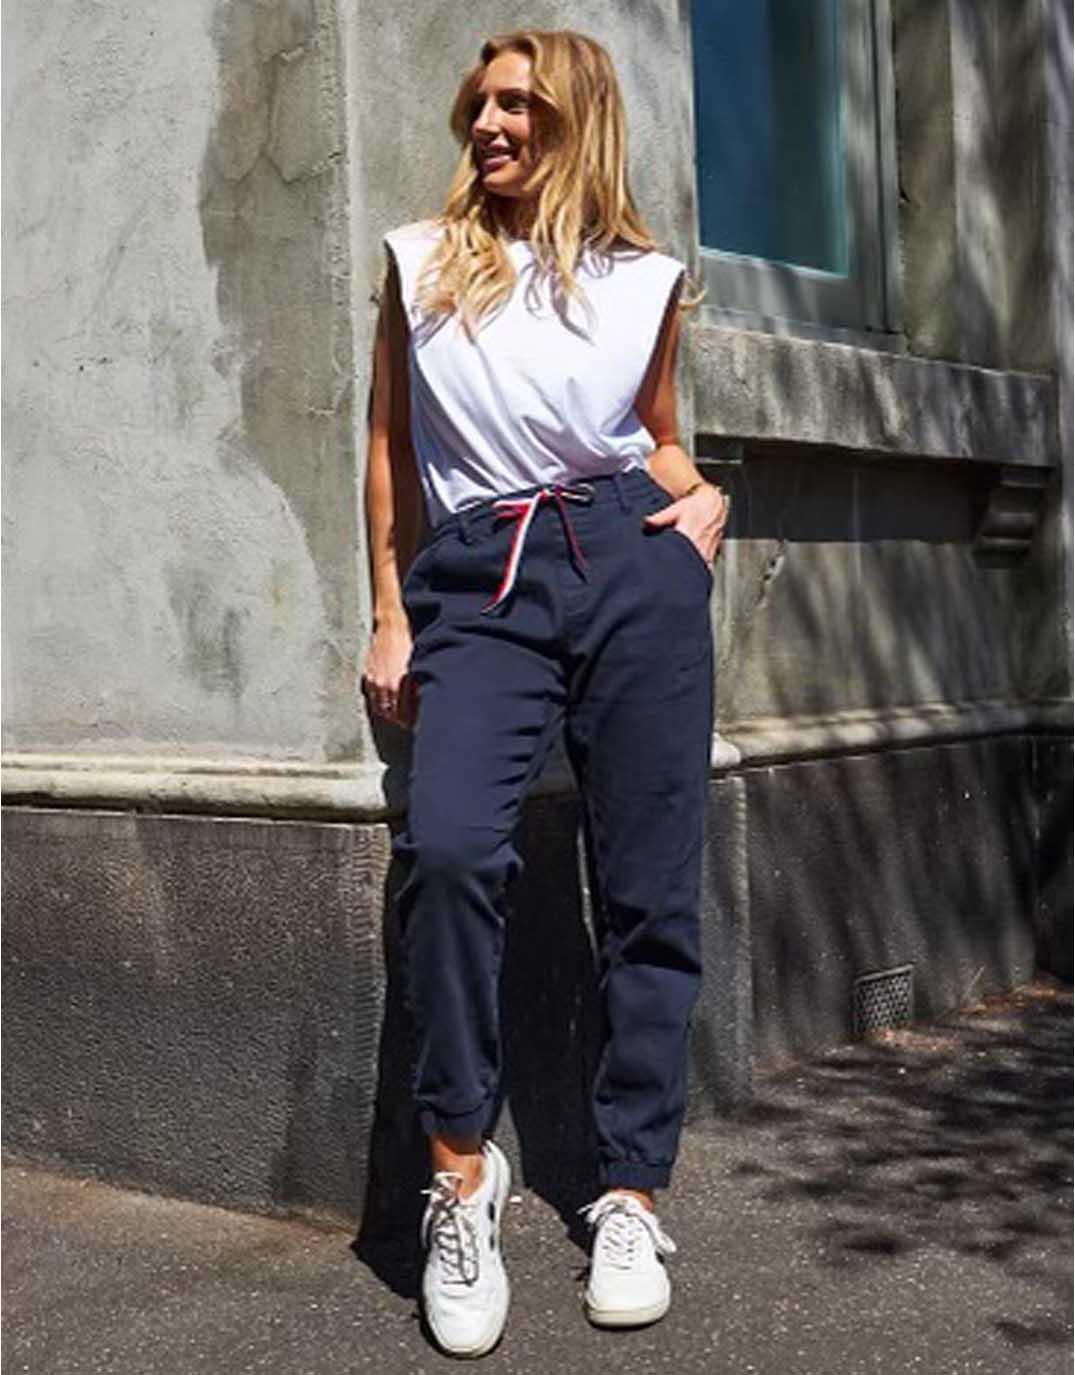 Saint Rose - Libby Jogger - French Navy - White & Co Living Jeans